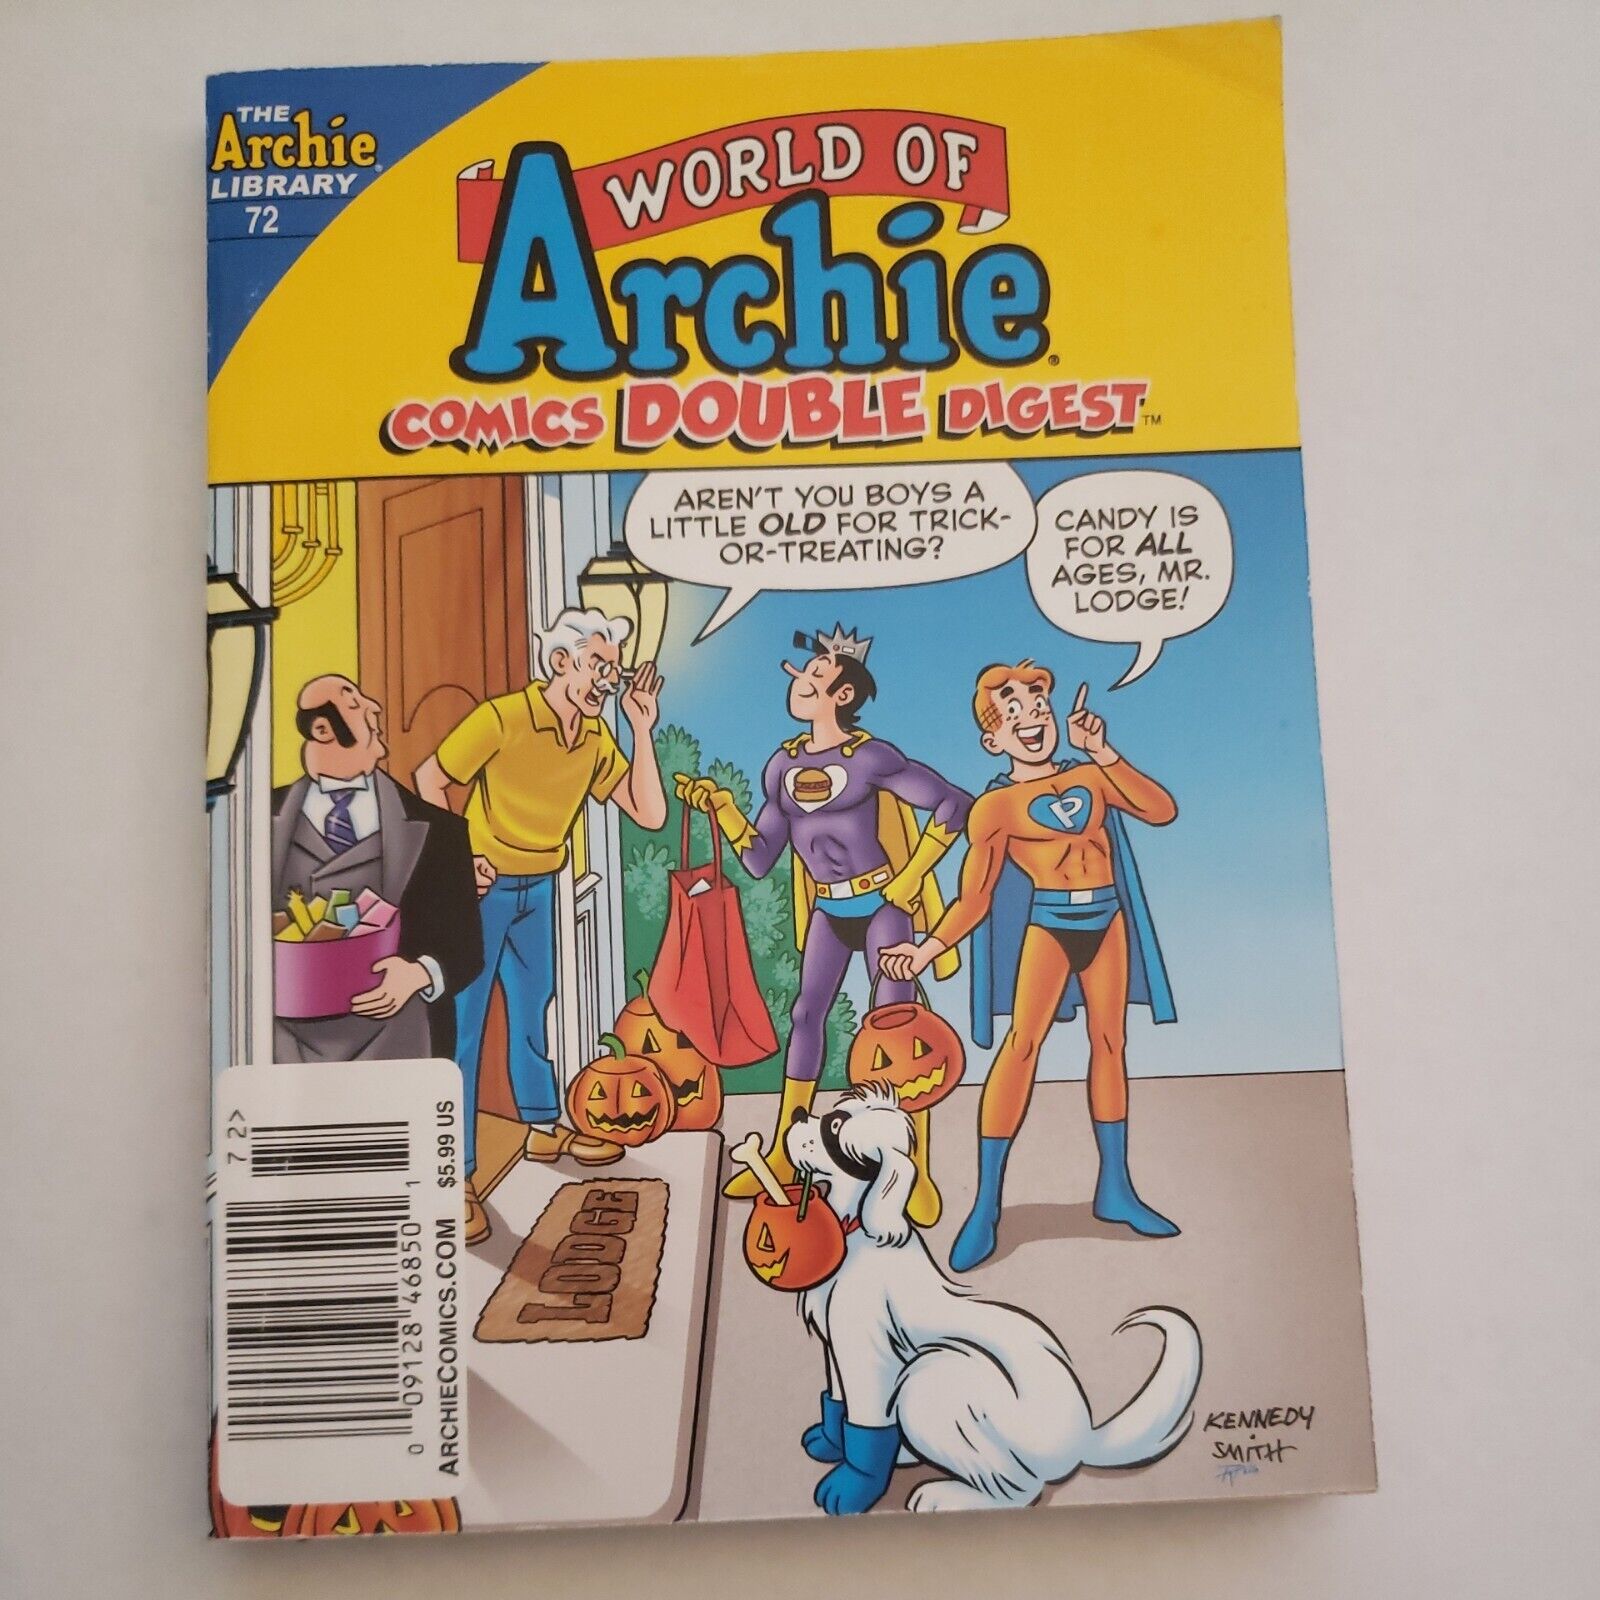 Archie World of Archie comics double digest #72